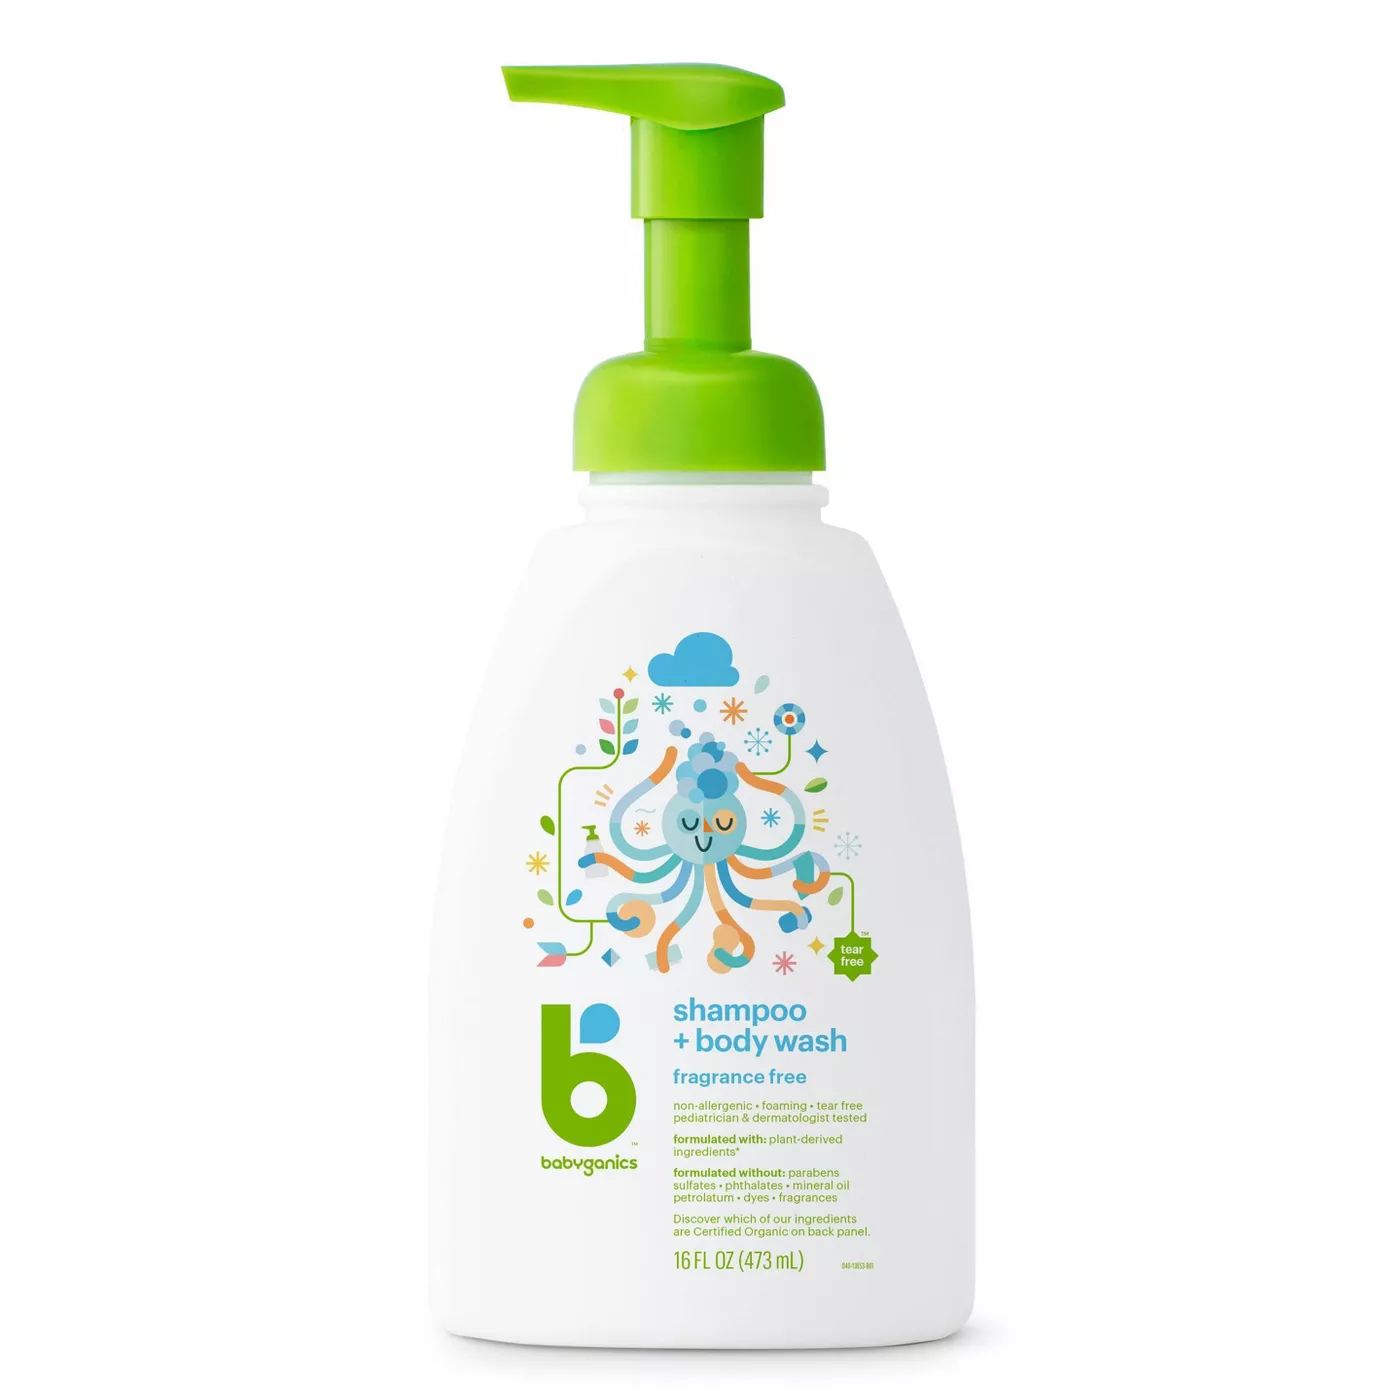 Babyganics Baby Shampoo + Body Wash, Fragrance Free - 16 fl oz Pump Bottle - image 1 of 5